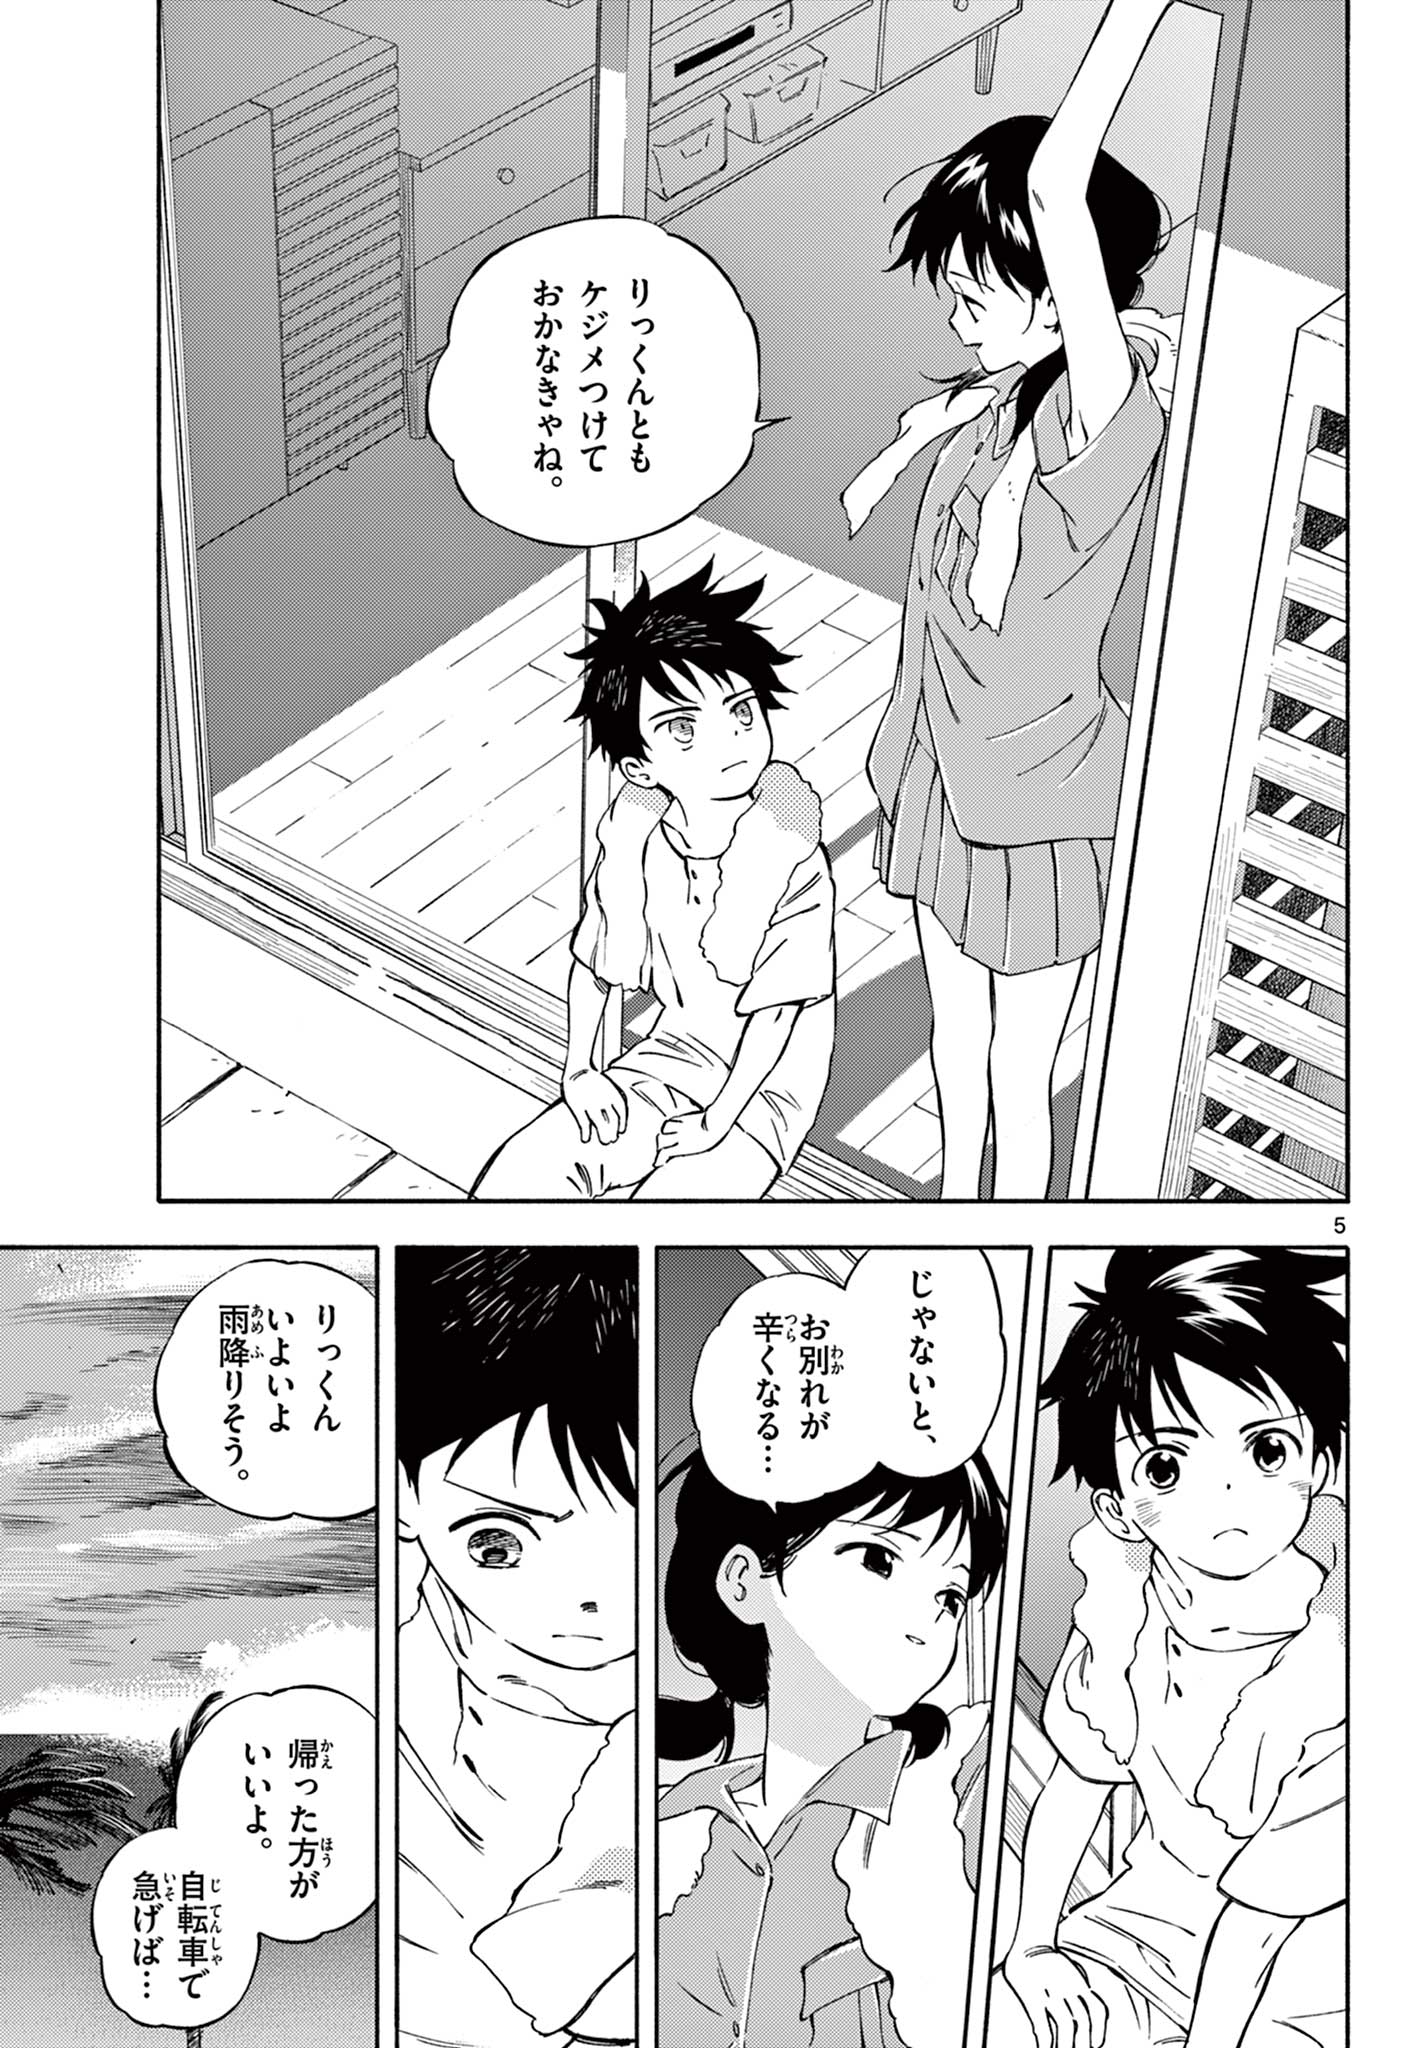 Nami no Shijima no Horizont - Chapter 13.1 - Page 5